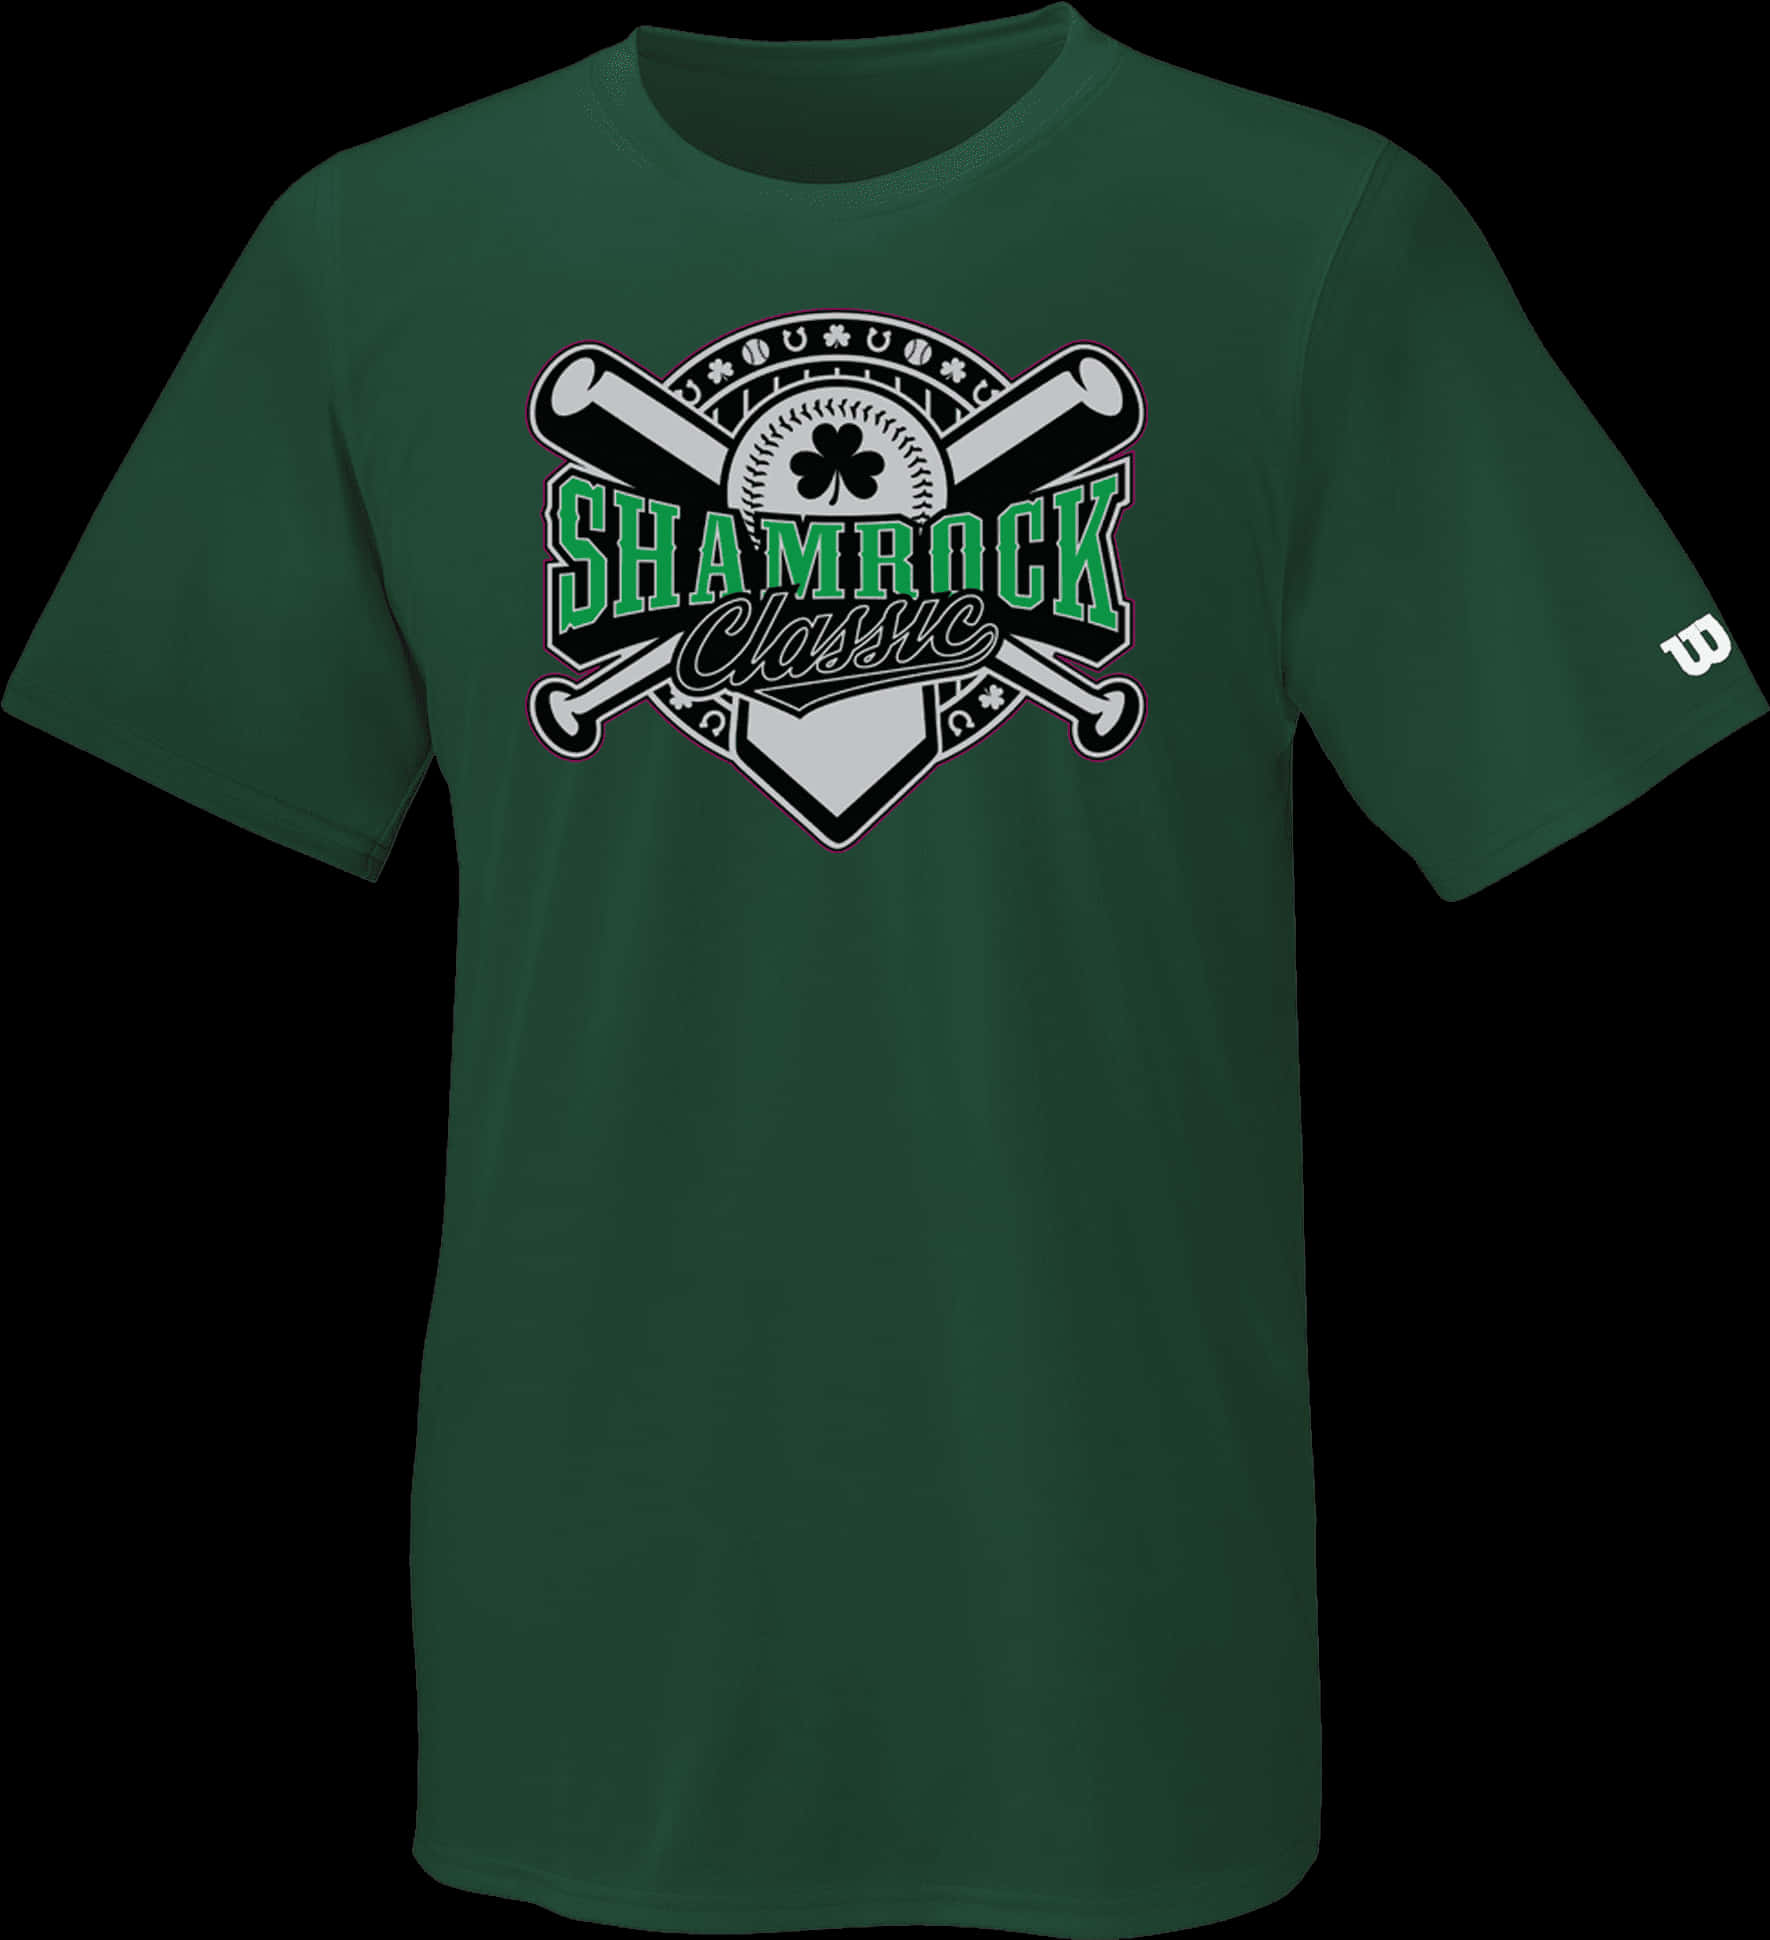 Shamrock Classic Green Tshirt Design PNG